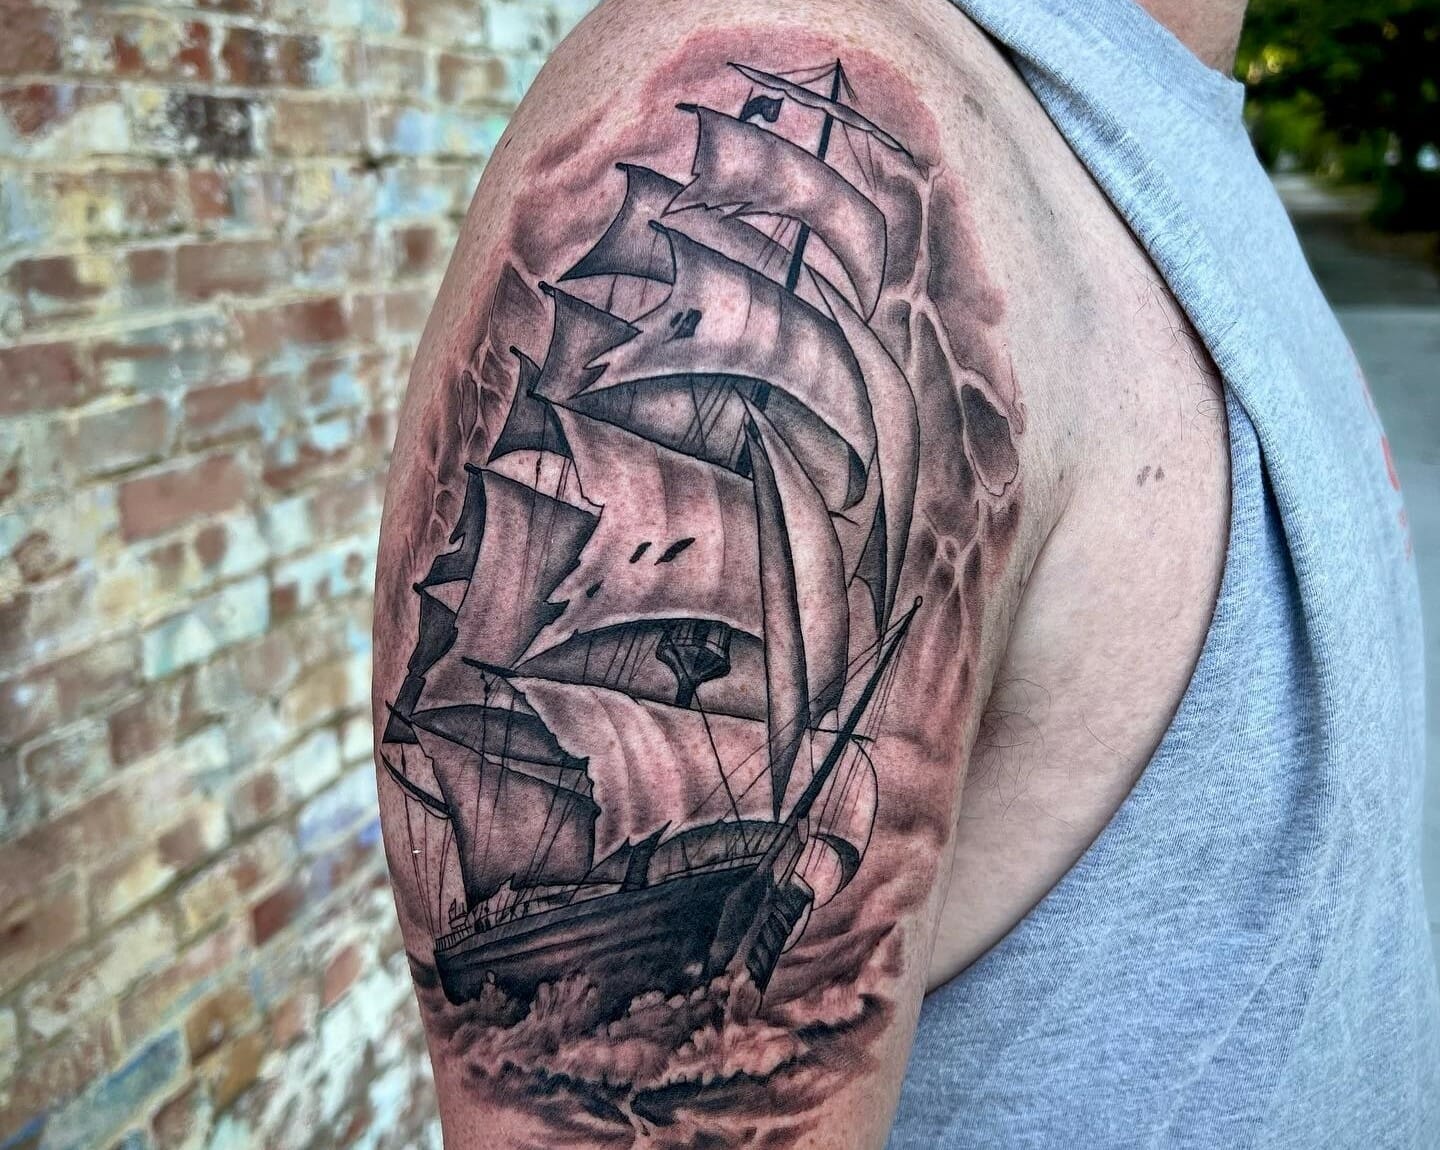 70 Ship Tattoo Ideas For Men  A Sea Of Sailor Designs